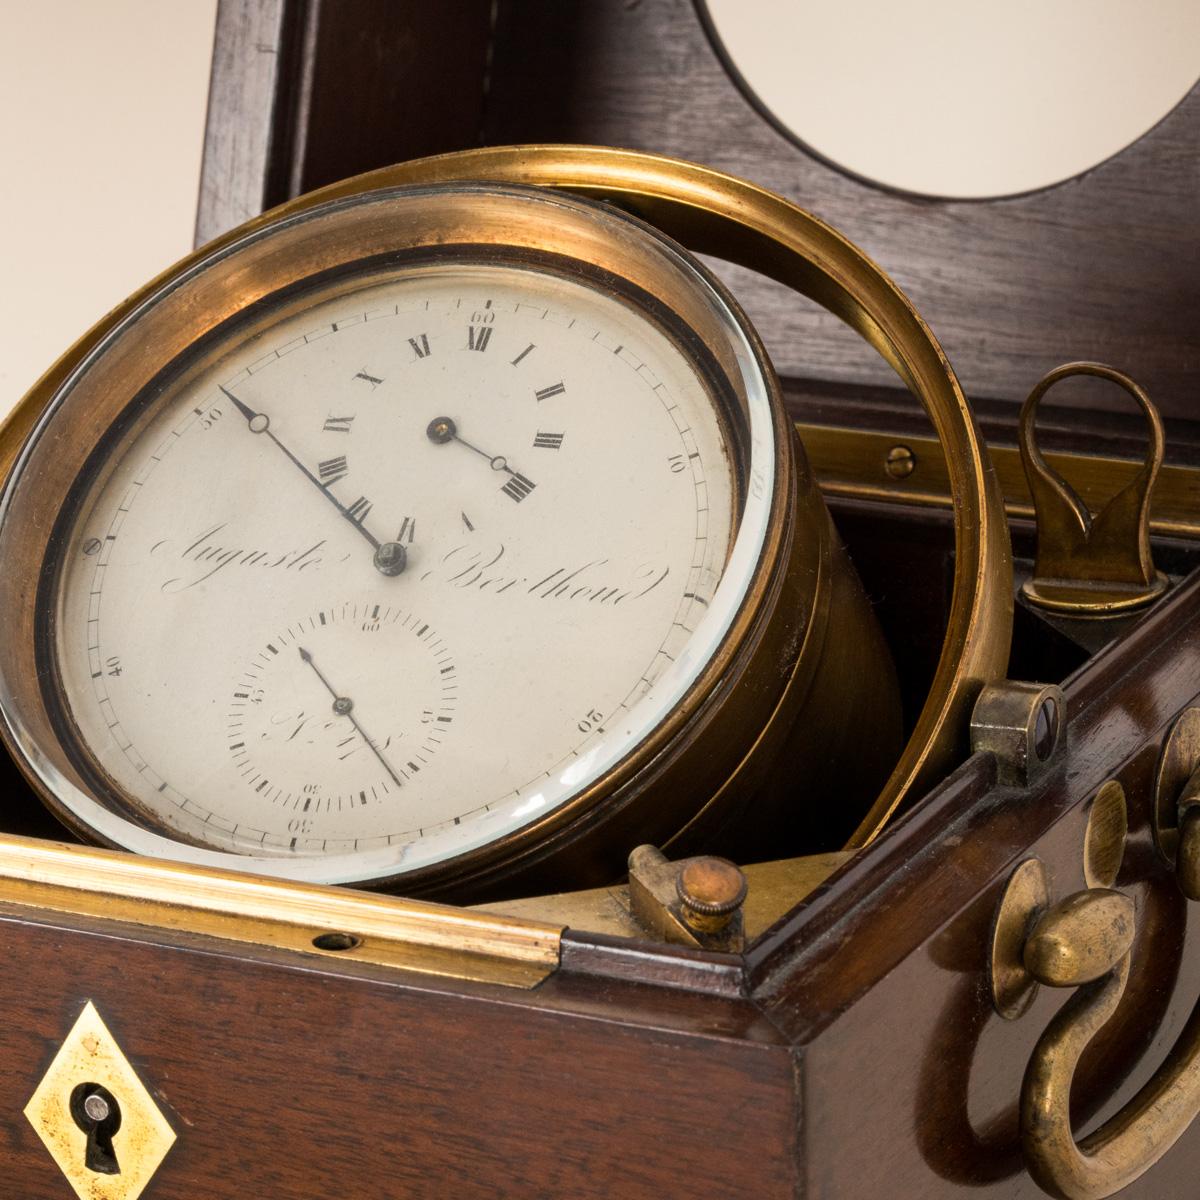 Auguste Berthoud. A Rare Antique Experimental Marine Chronometer C1840 For Sale 2